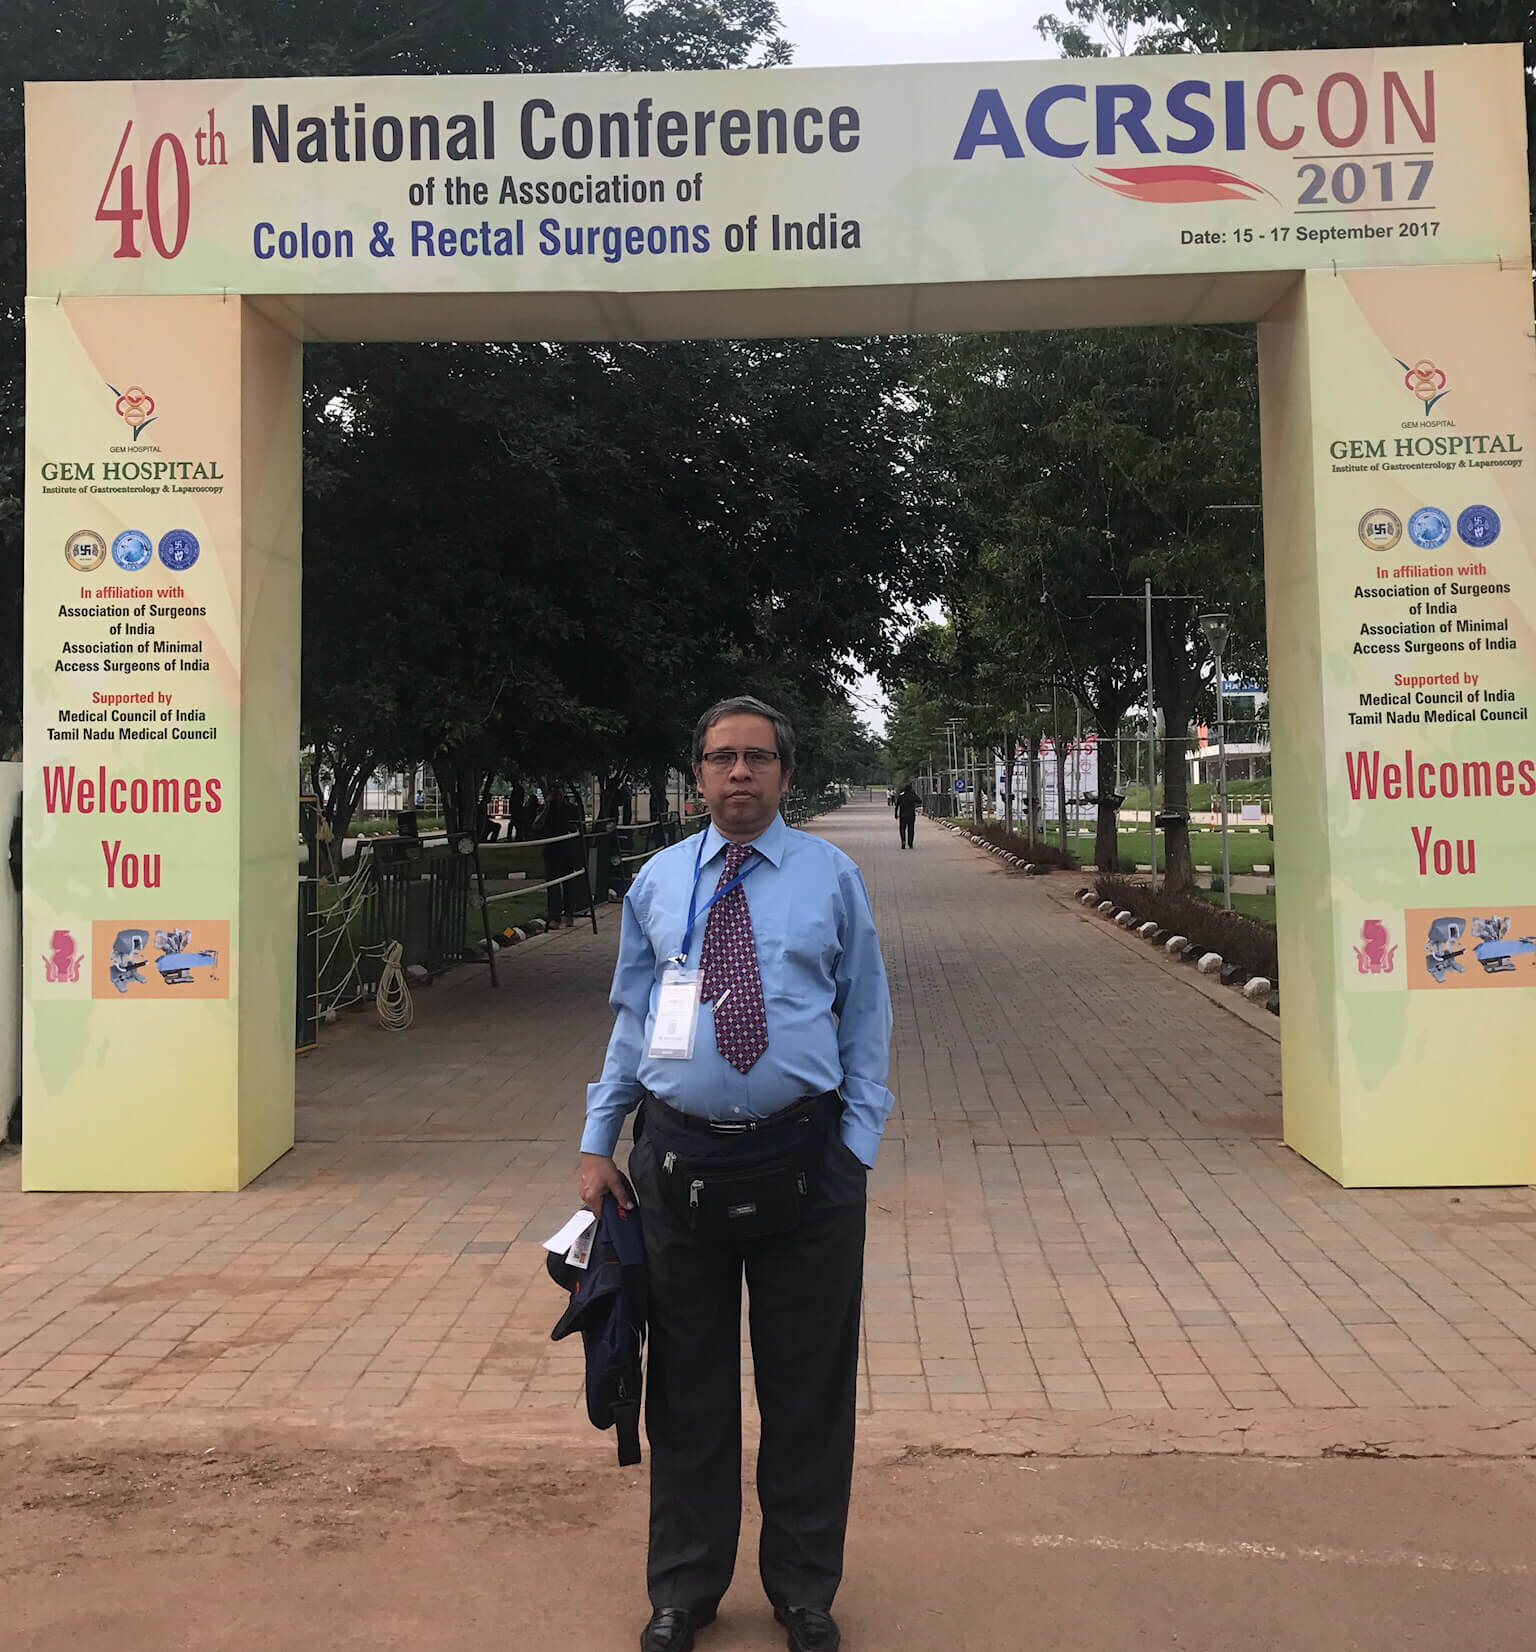 Attending ACRSICON 2017 in Coimbatore, India